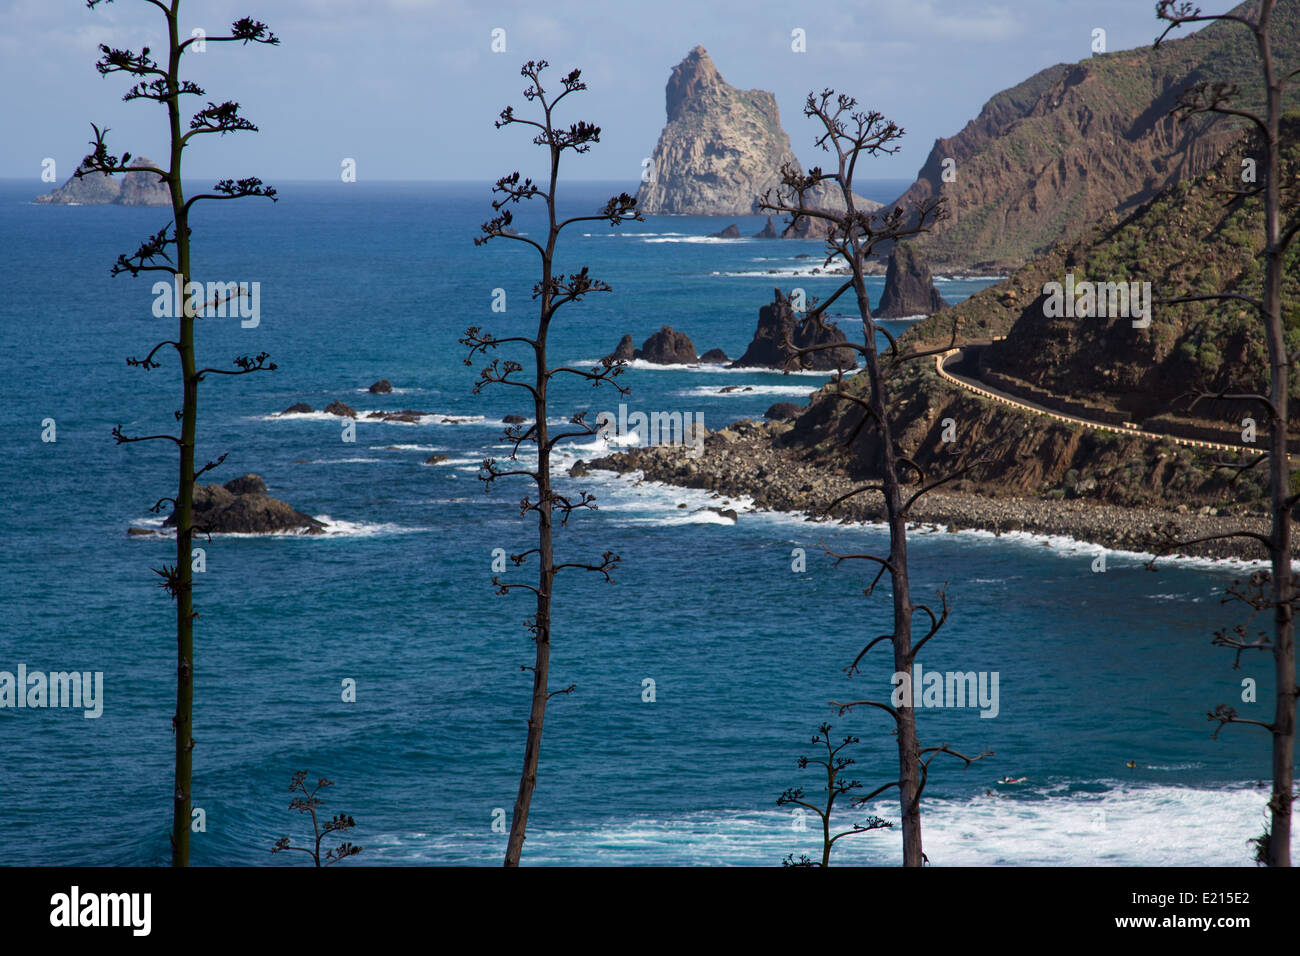 The rocky coastline near Almaciga in Northern Tenerife Stock Photo